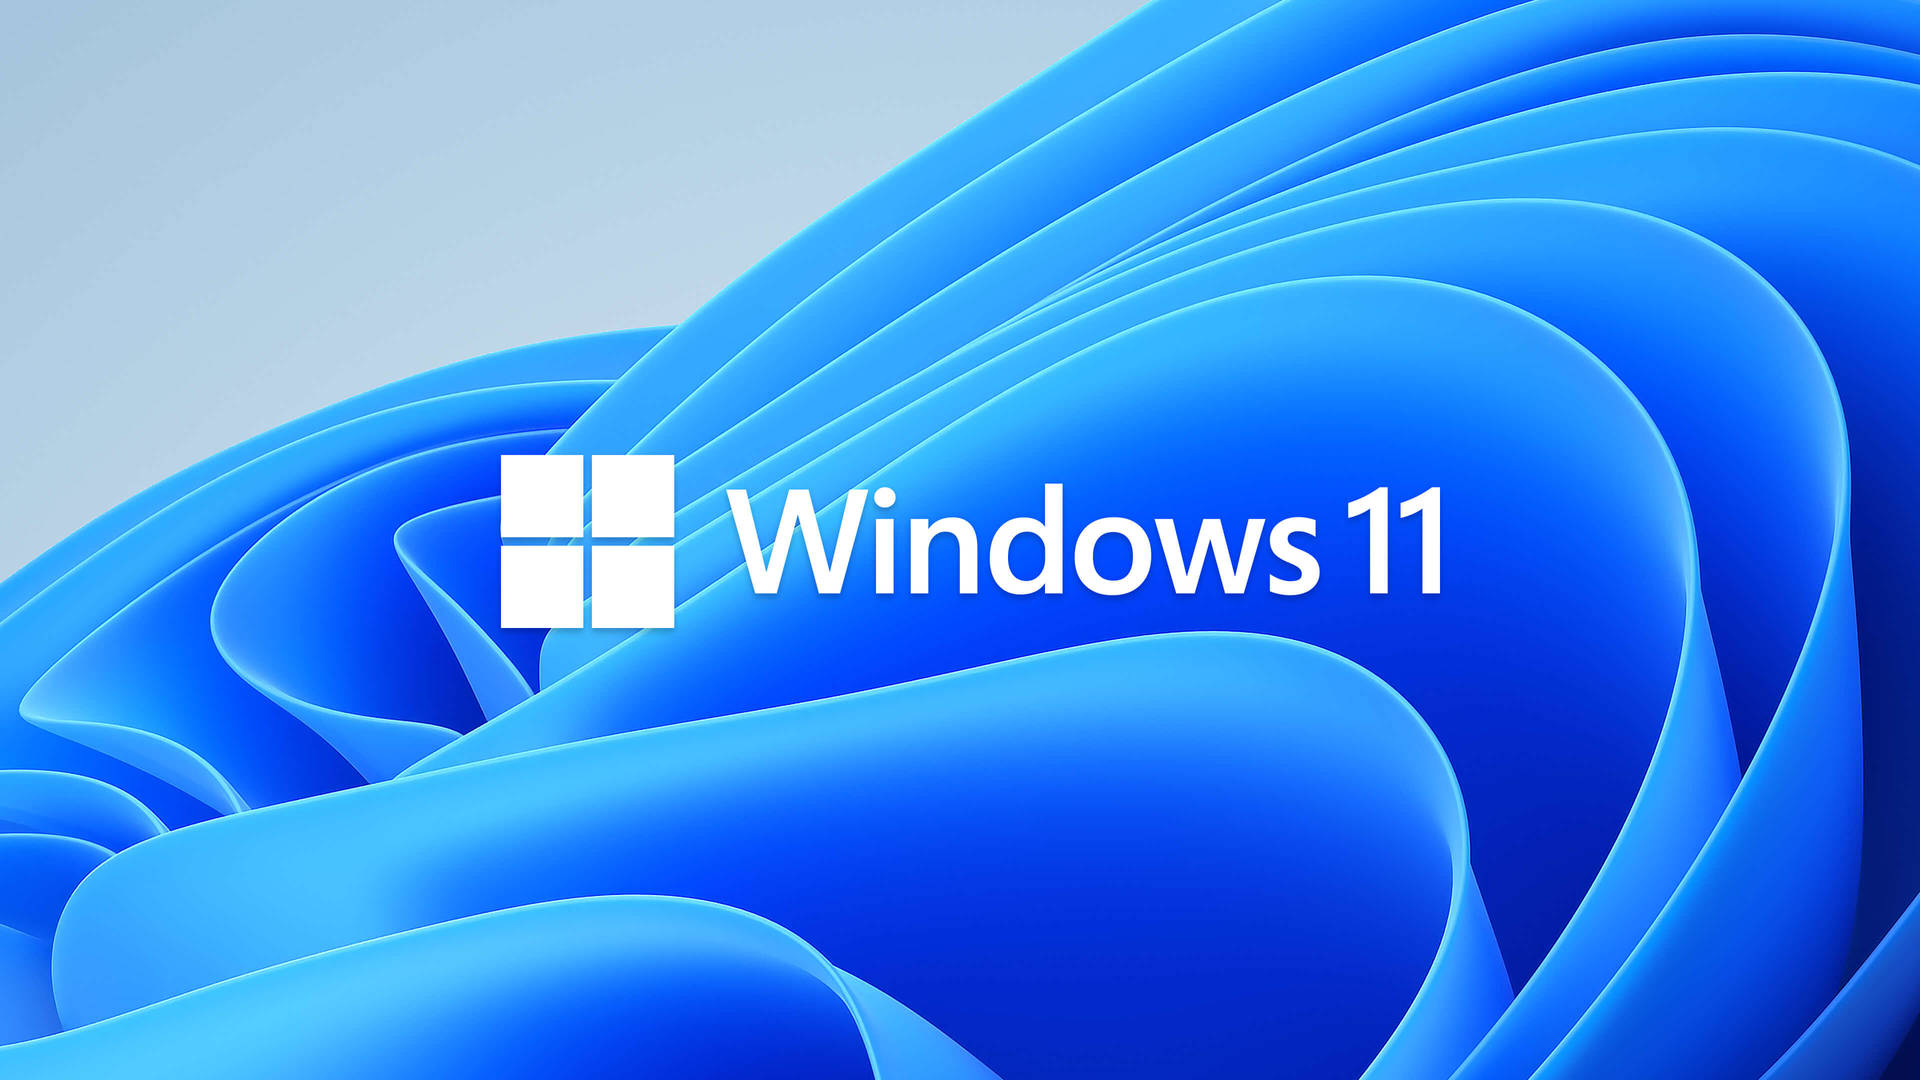 200+] Windows 11 Wallpapers 